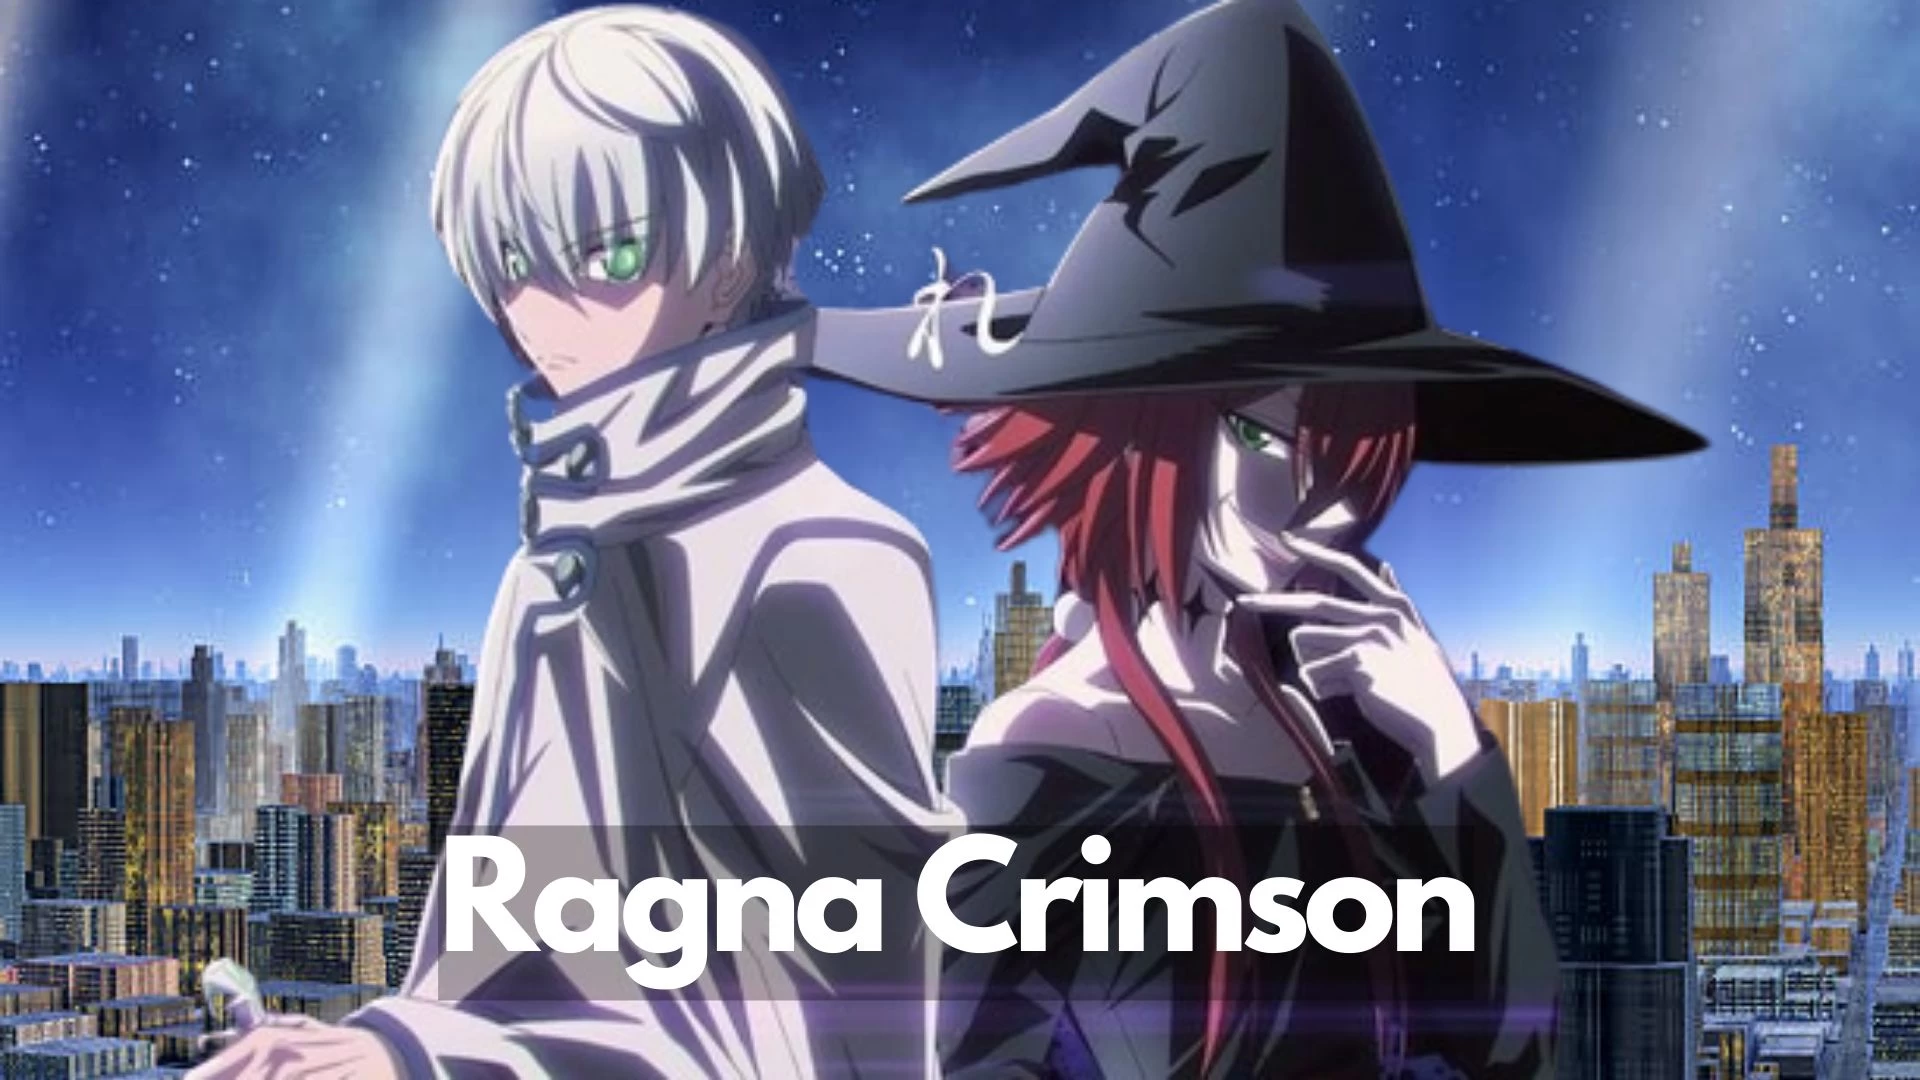 Where to Watch Ragna Crimson Anime? Ragna Crimson Season 1 Episode 3 Release Date, Time, Plot and More